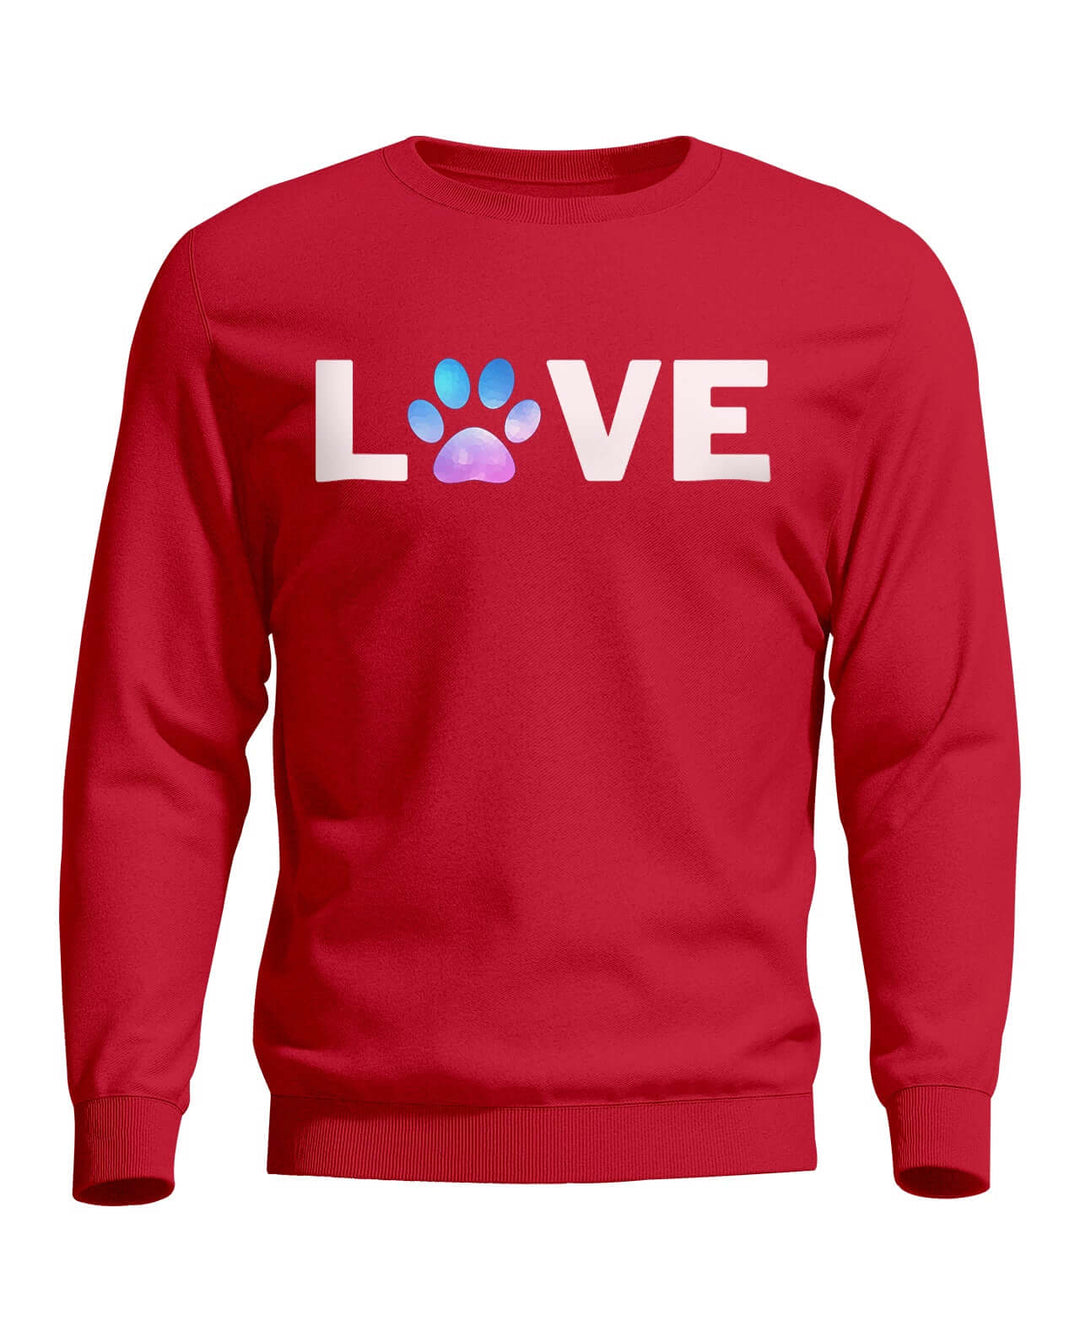 Paw's love Sweatshirt